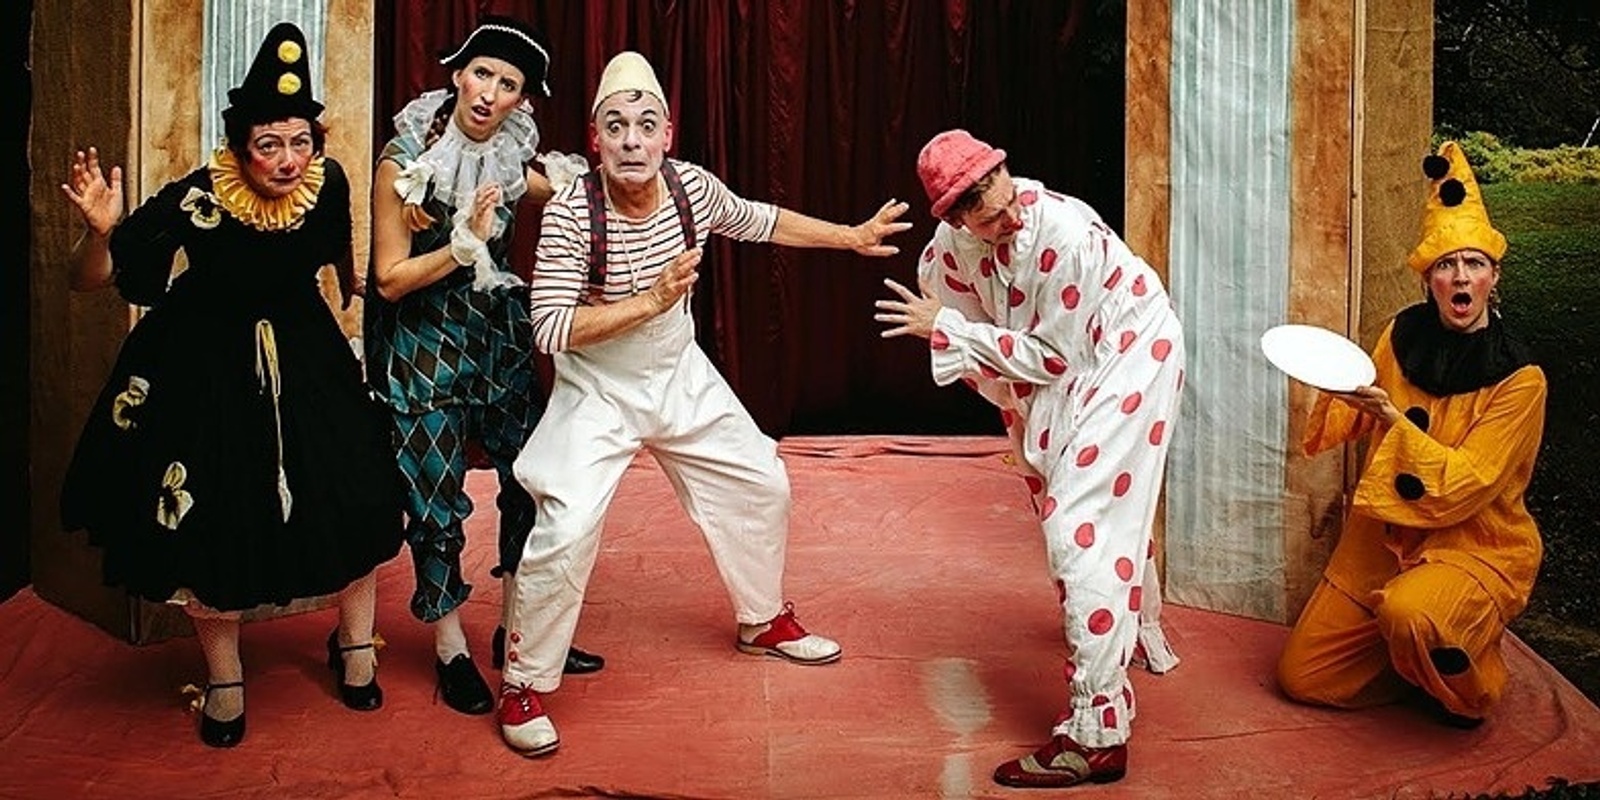 Preposterous! A Happenstance Clown Circus